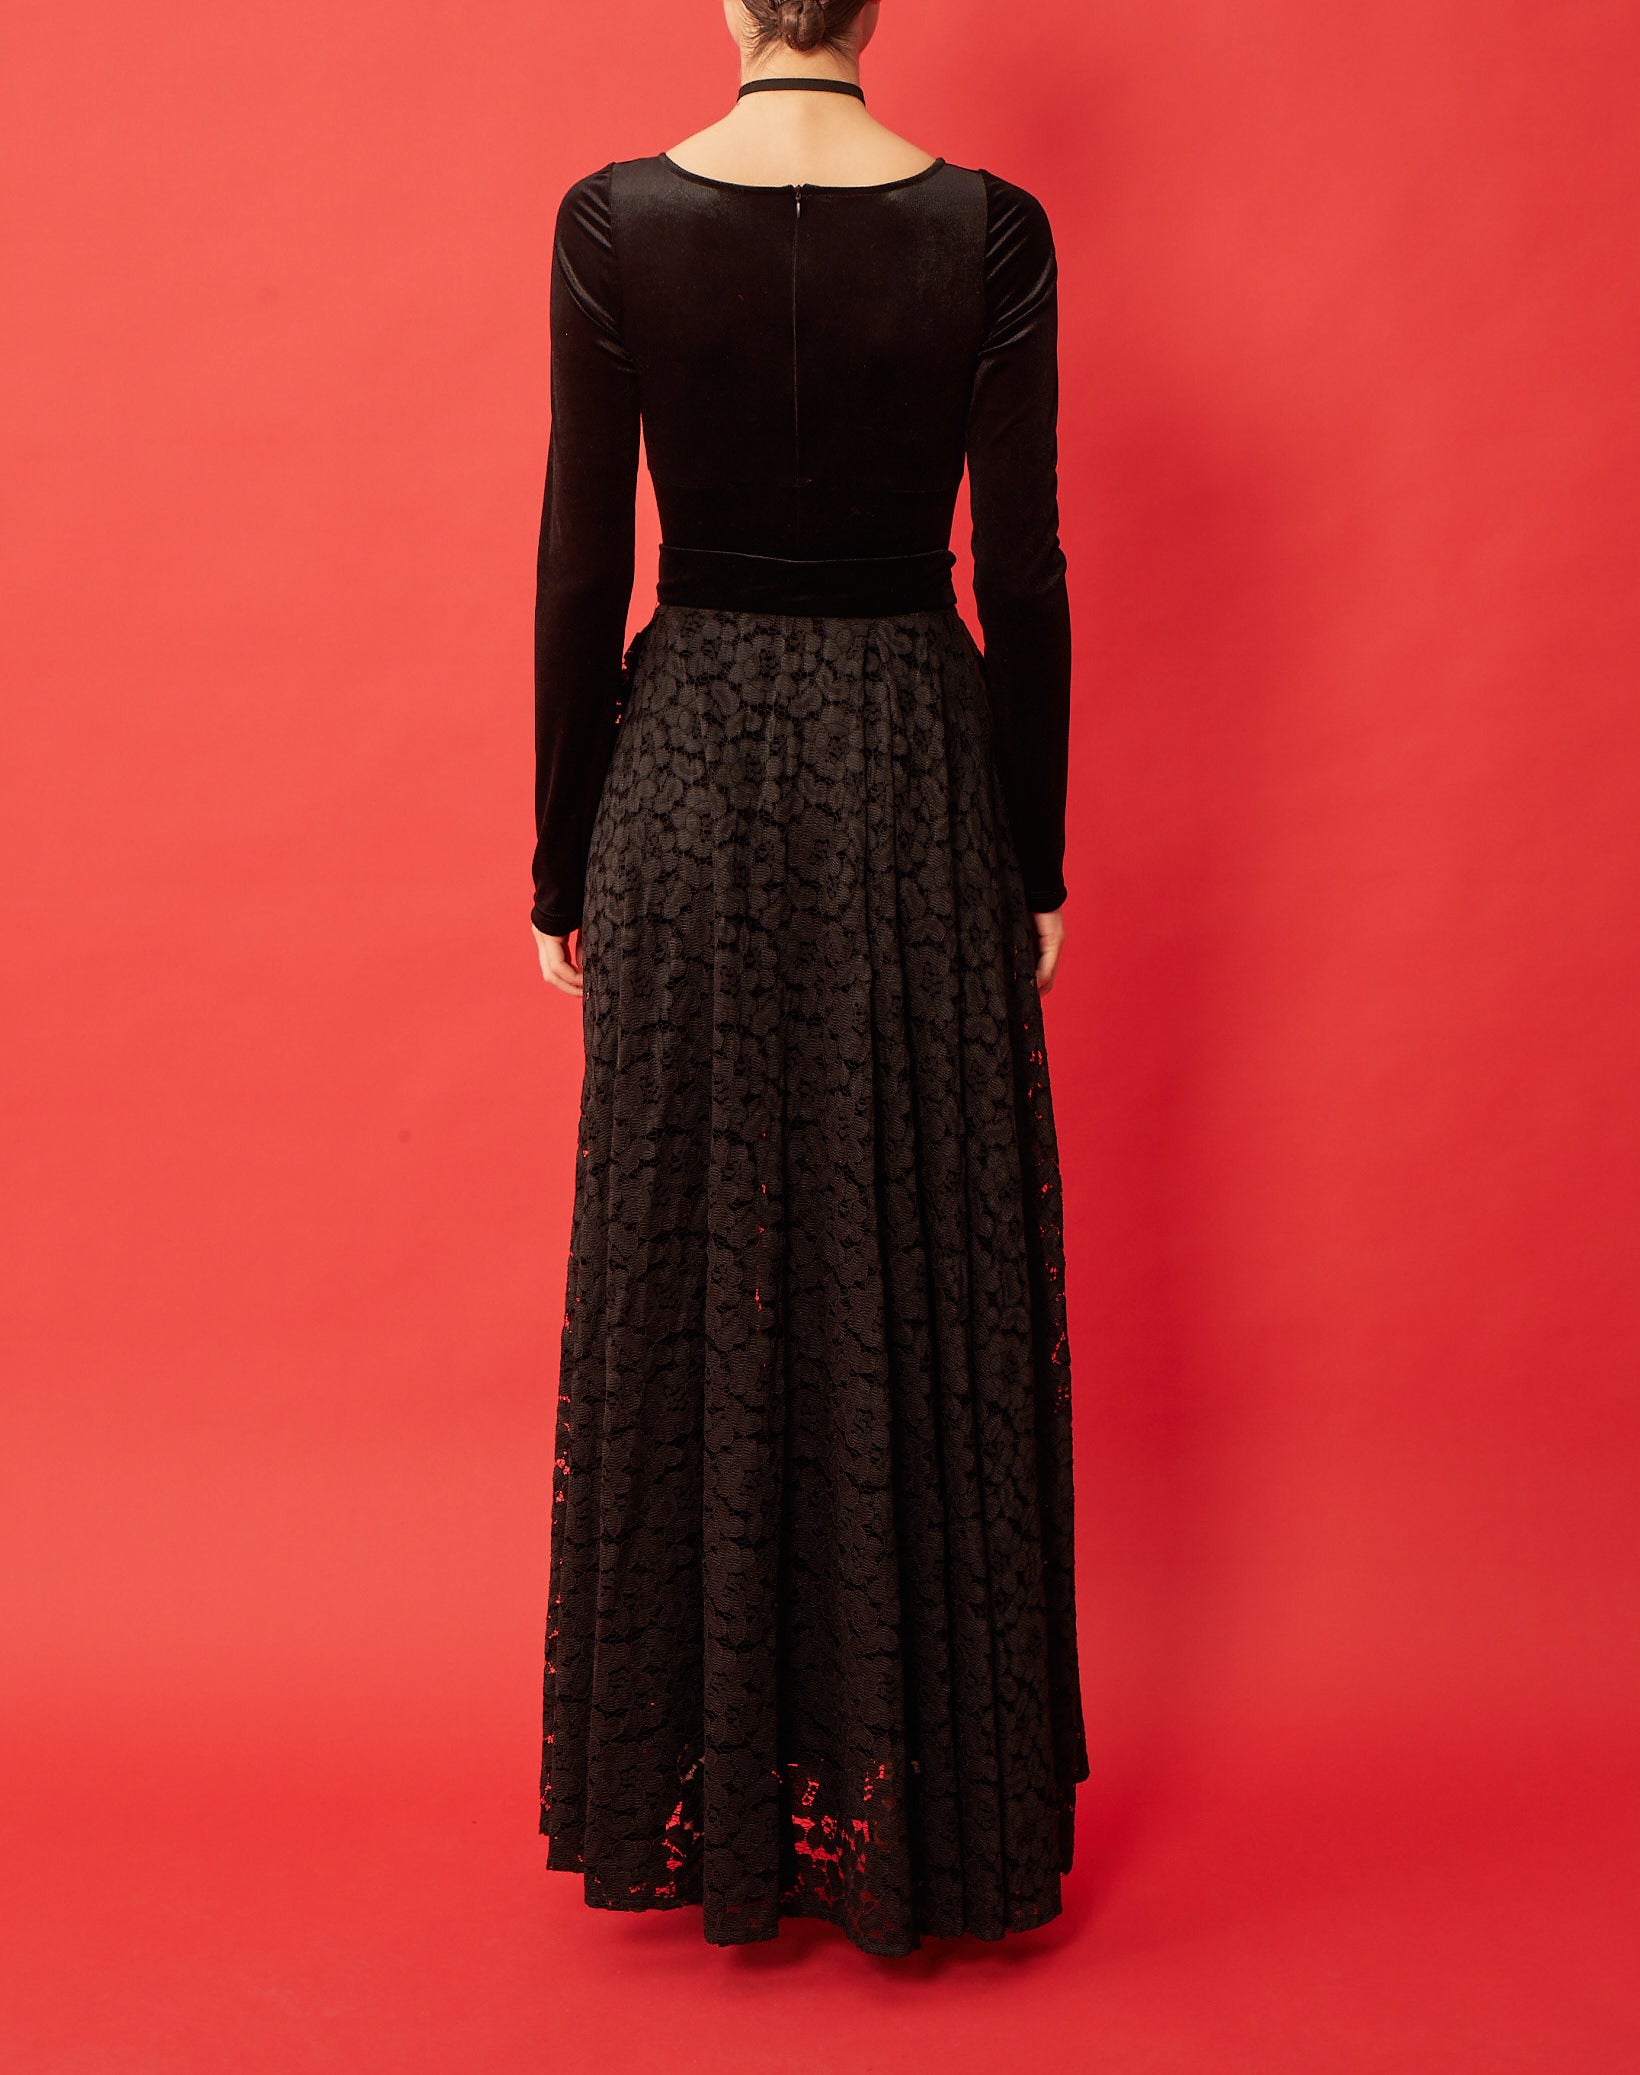 SALLY - long black lace skirt